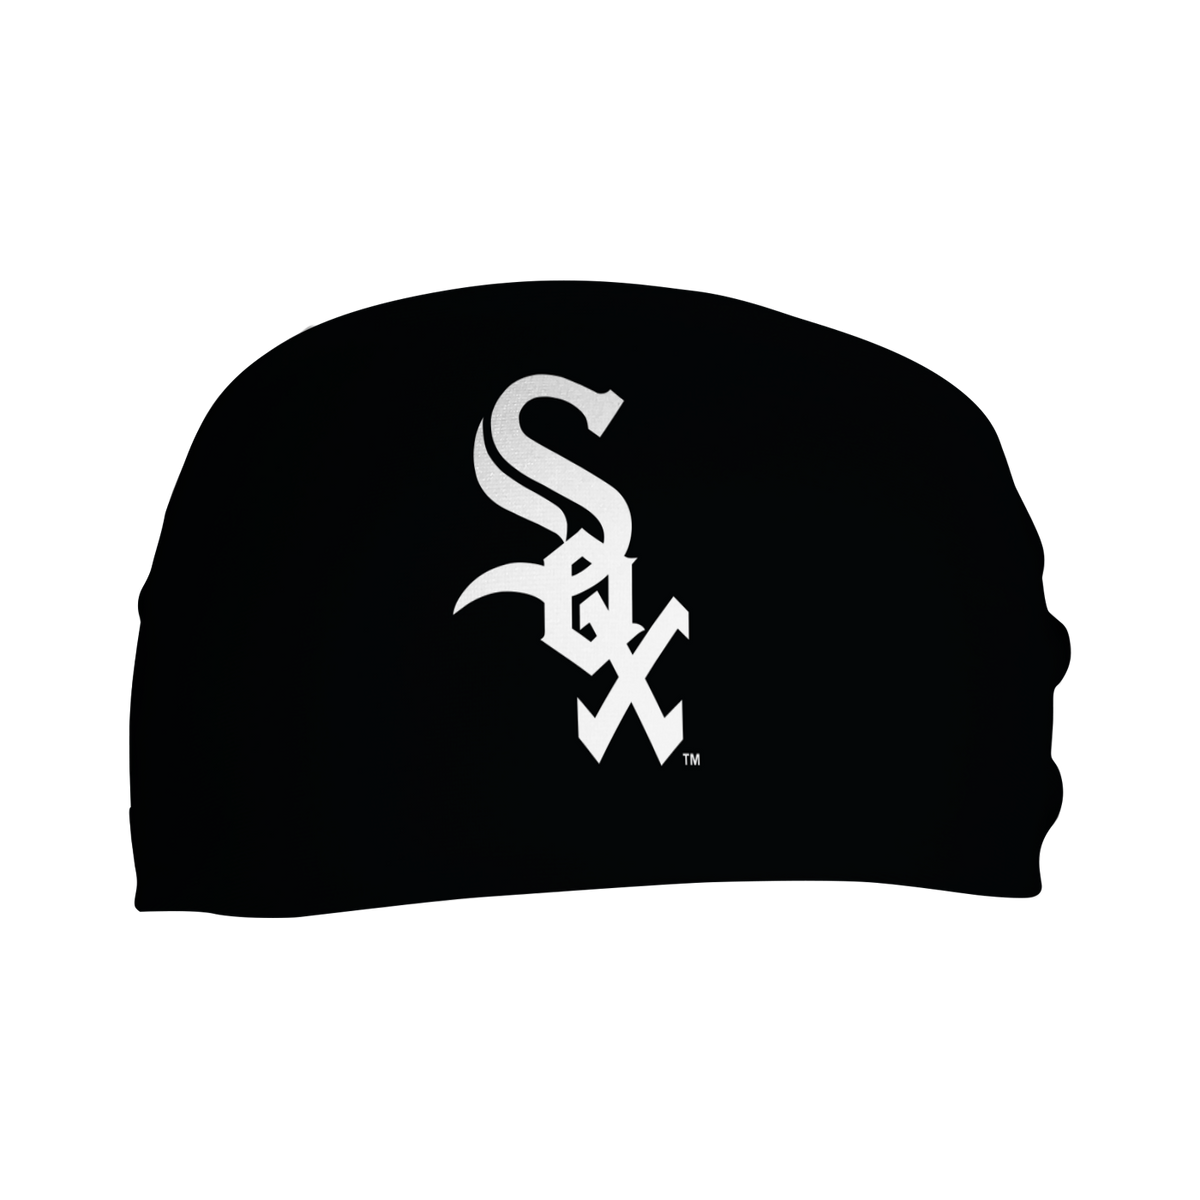 White Sox Cooling Headband: City Connect Cap Logo – Vertical Athletics